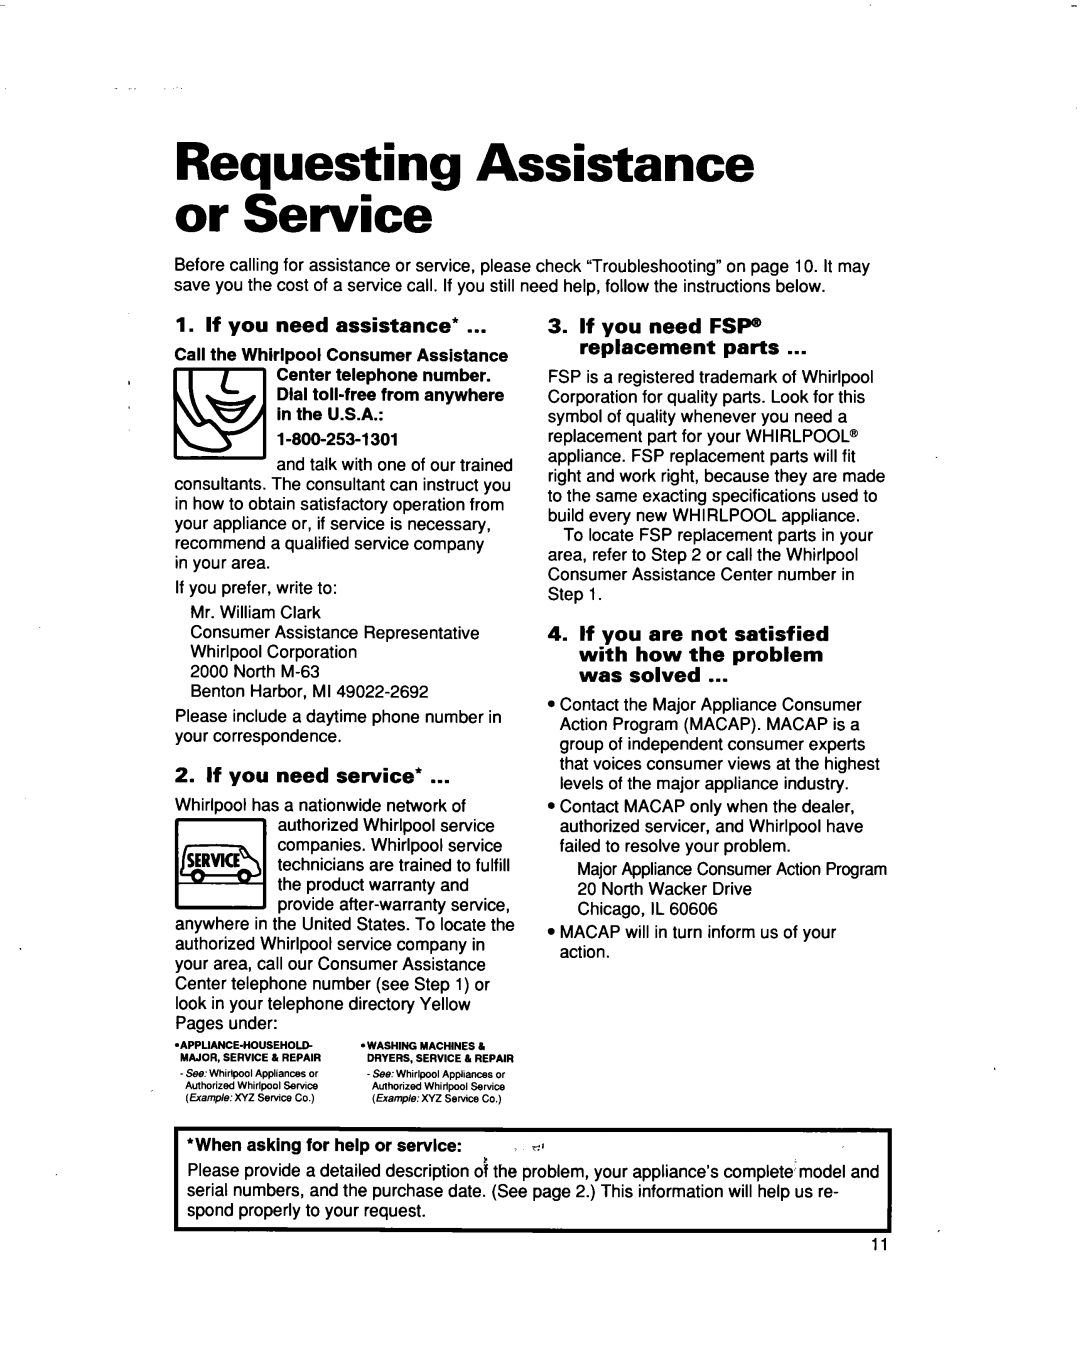 Whirlpool ACM492 warranty Requesting Assistance or Service, If you need assistance, If you need service 